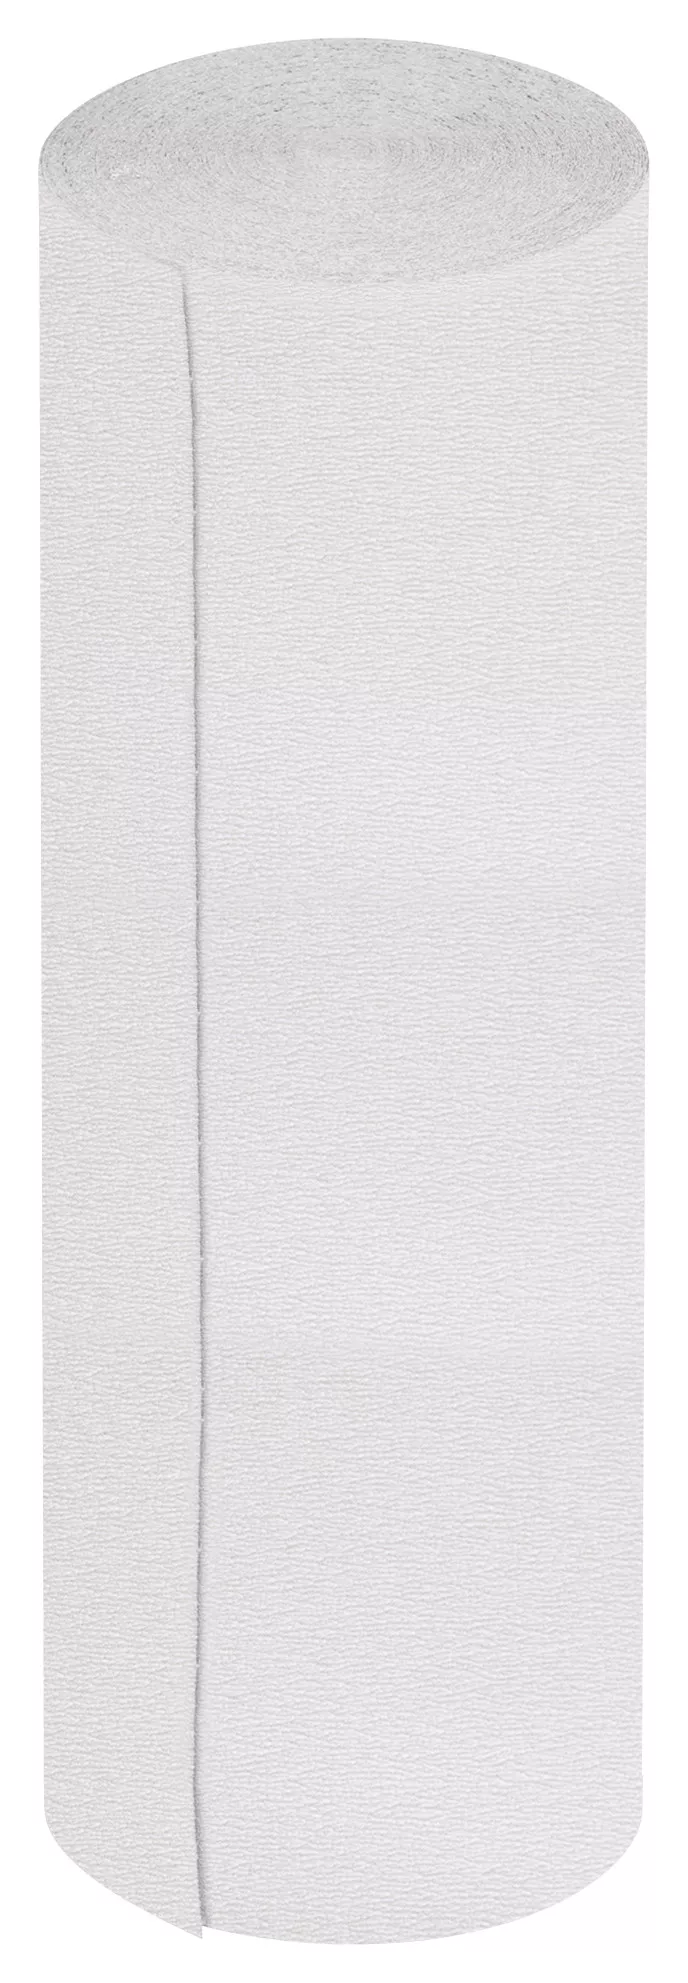 3M™ Stikit™ Paper Refill Roll 426U, 2-1/2 in x 80 in 150 A-weight,
10/Carton, 50 ea/Case